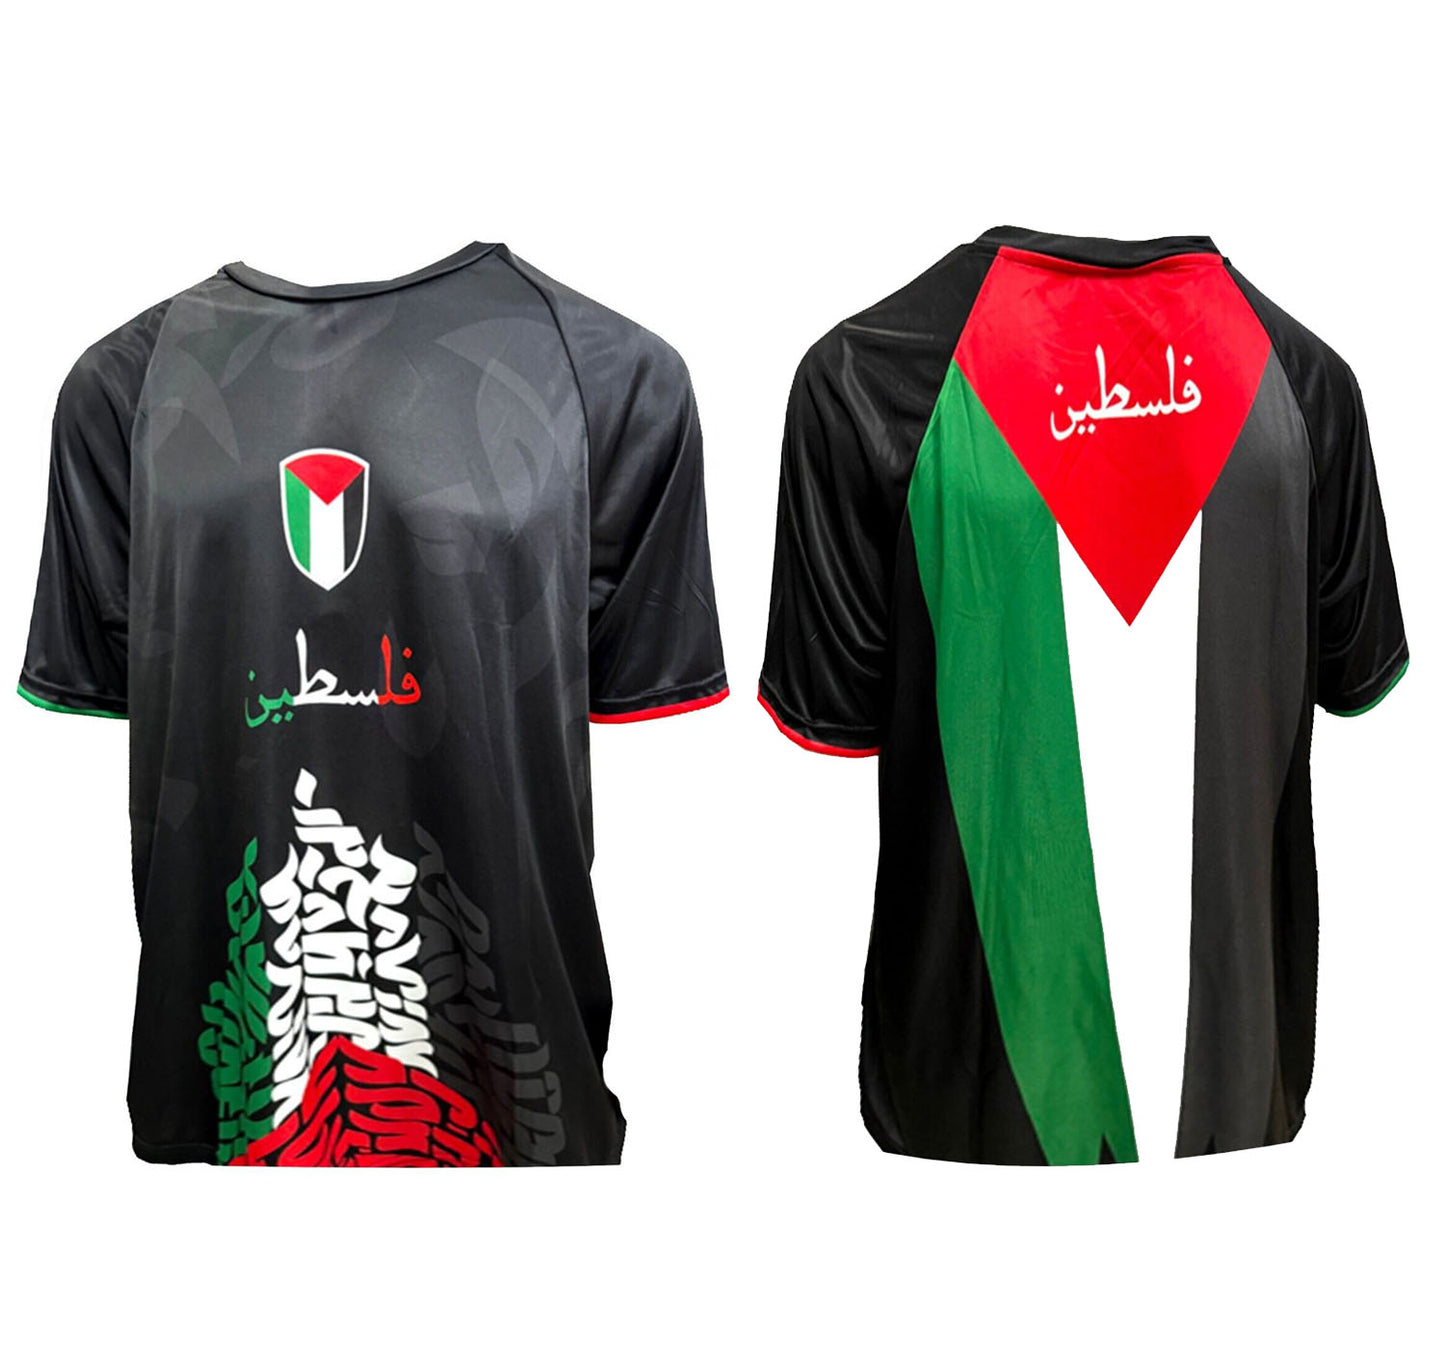 Gaza Freedom Free Palestine Football Top T-shirt Digital Sublimation Print